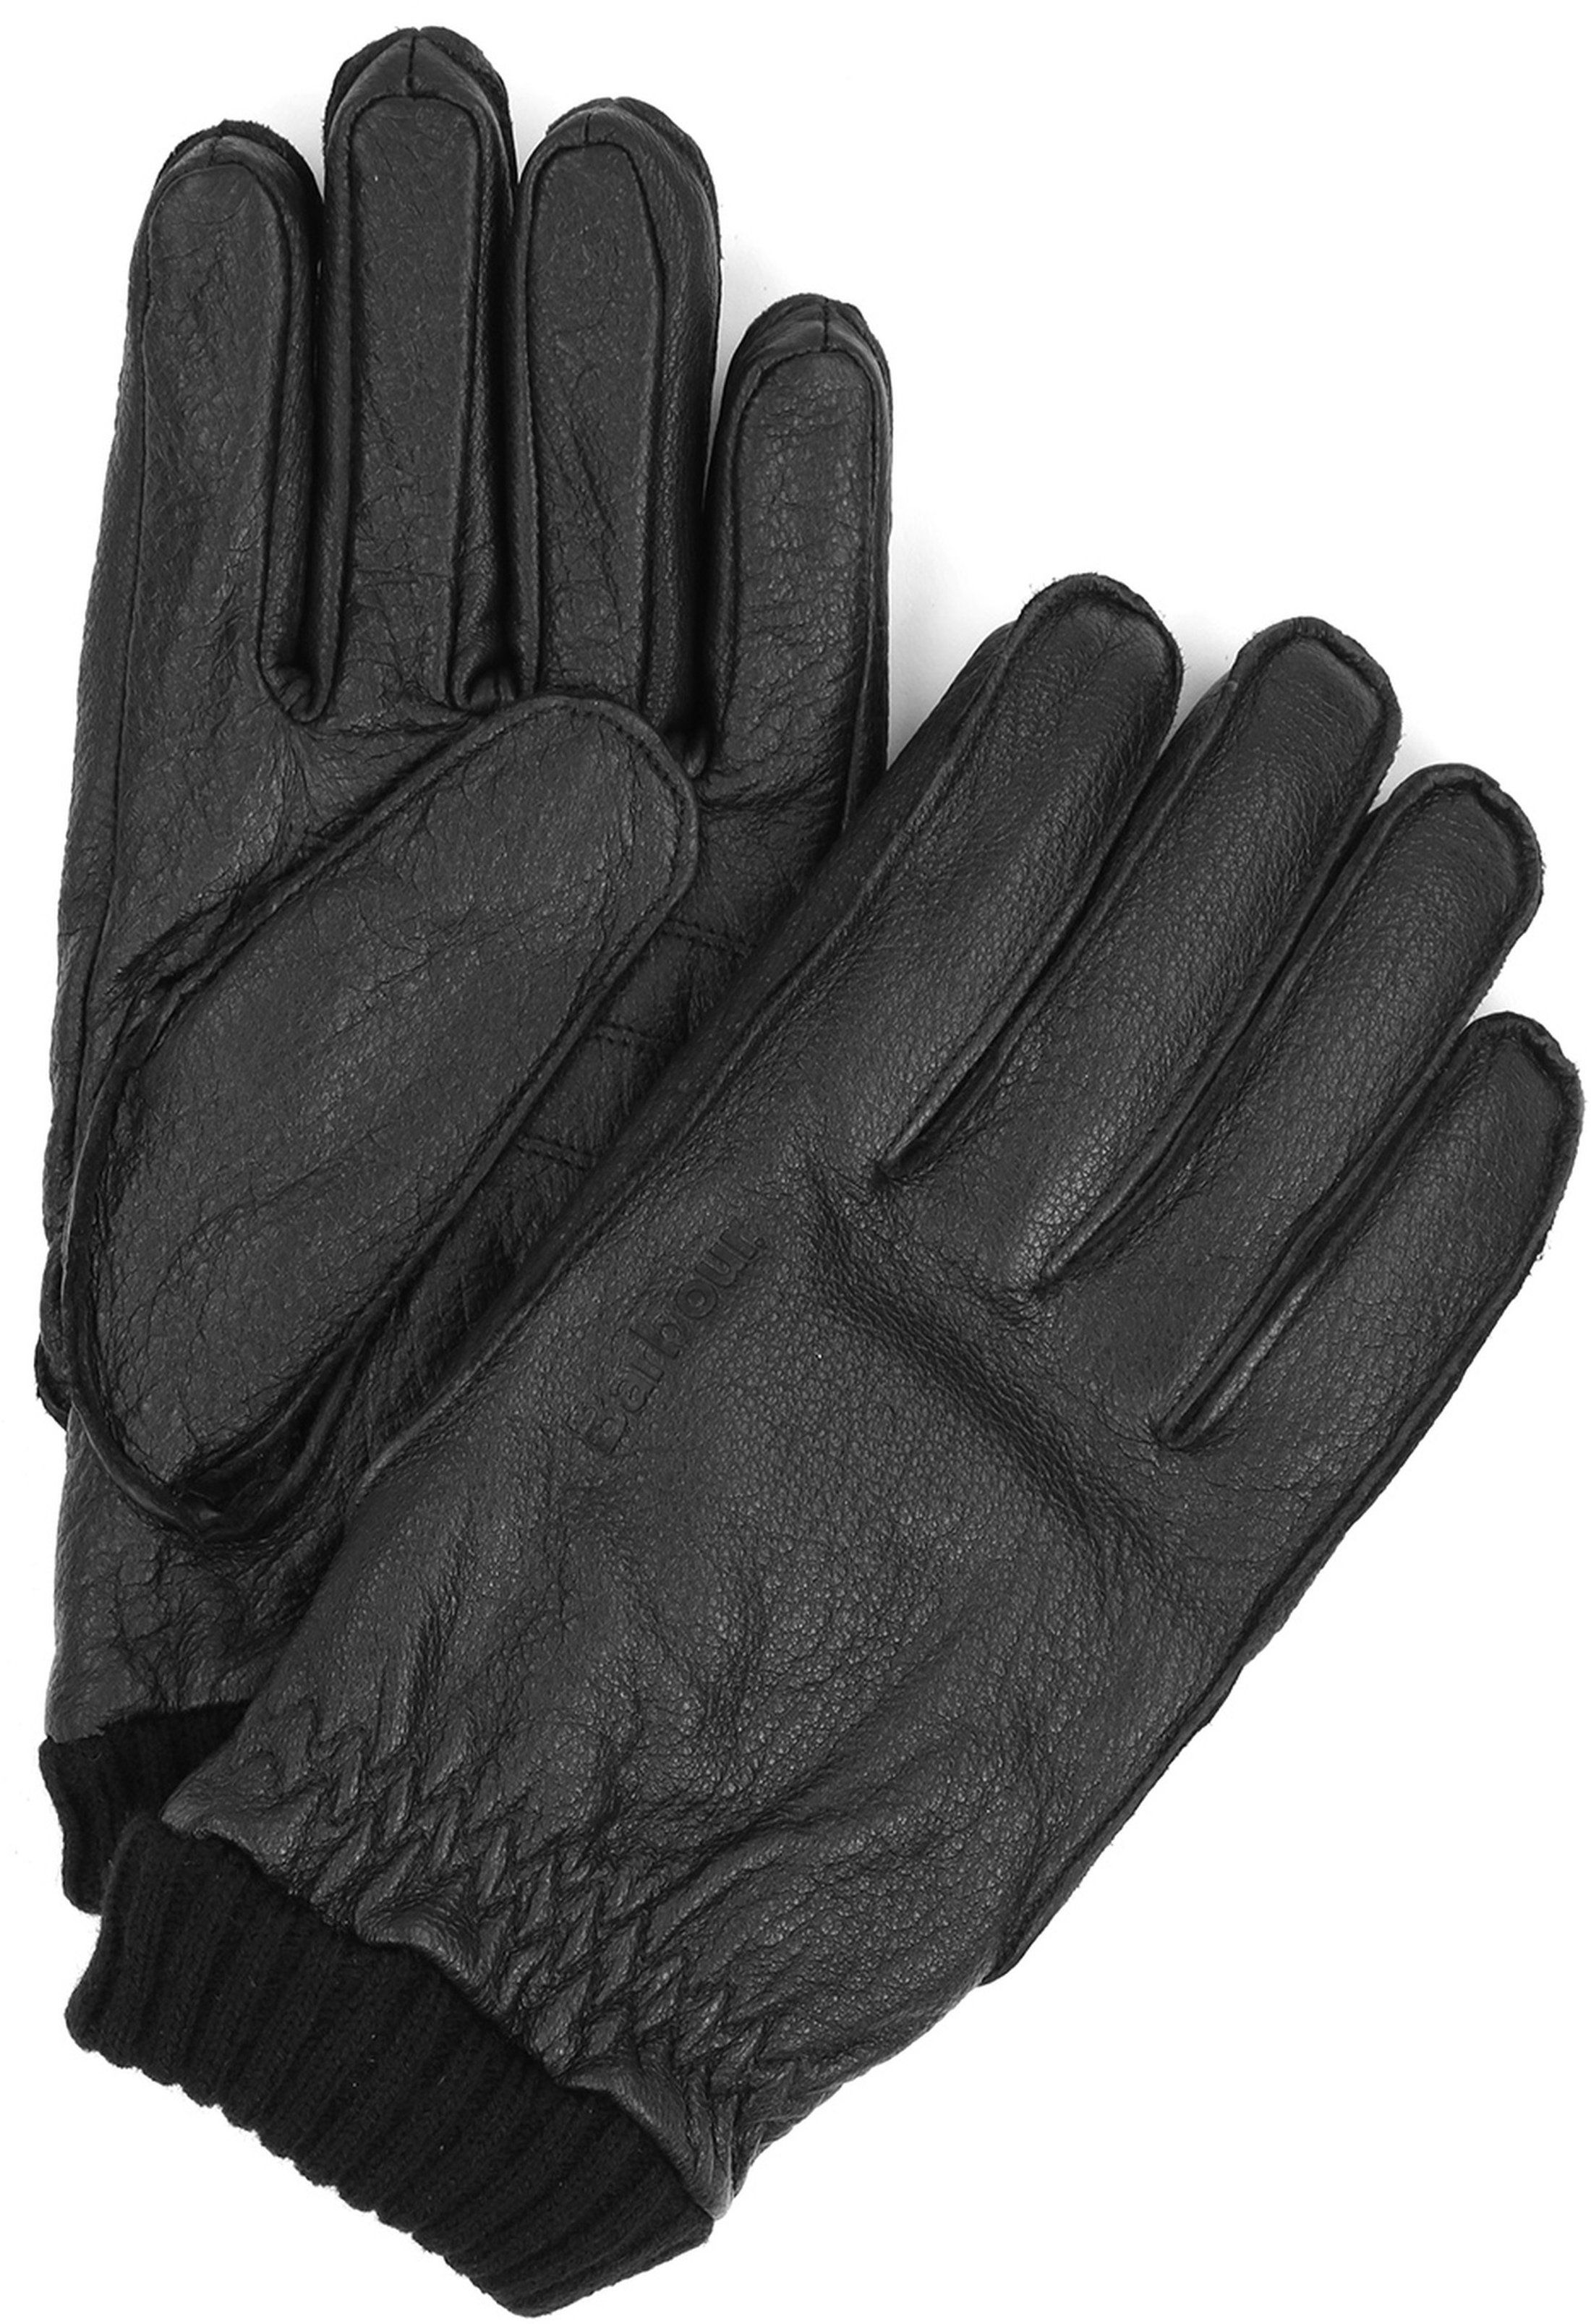 Barbour Gloves Black size XL